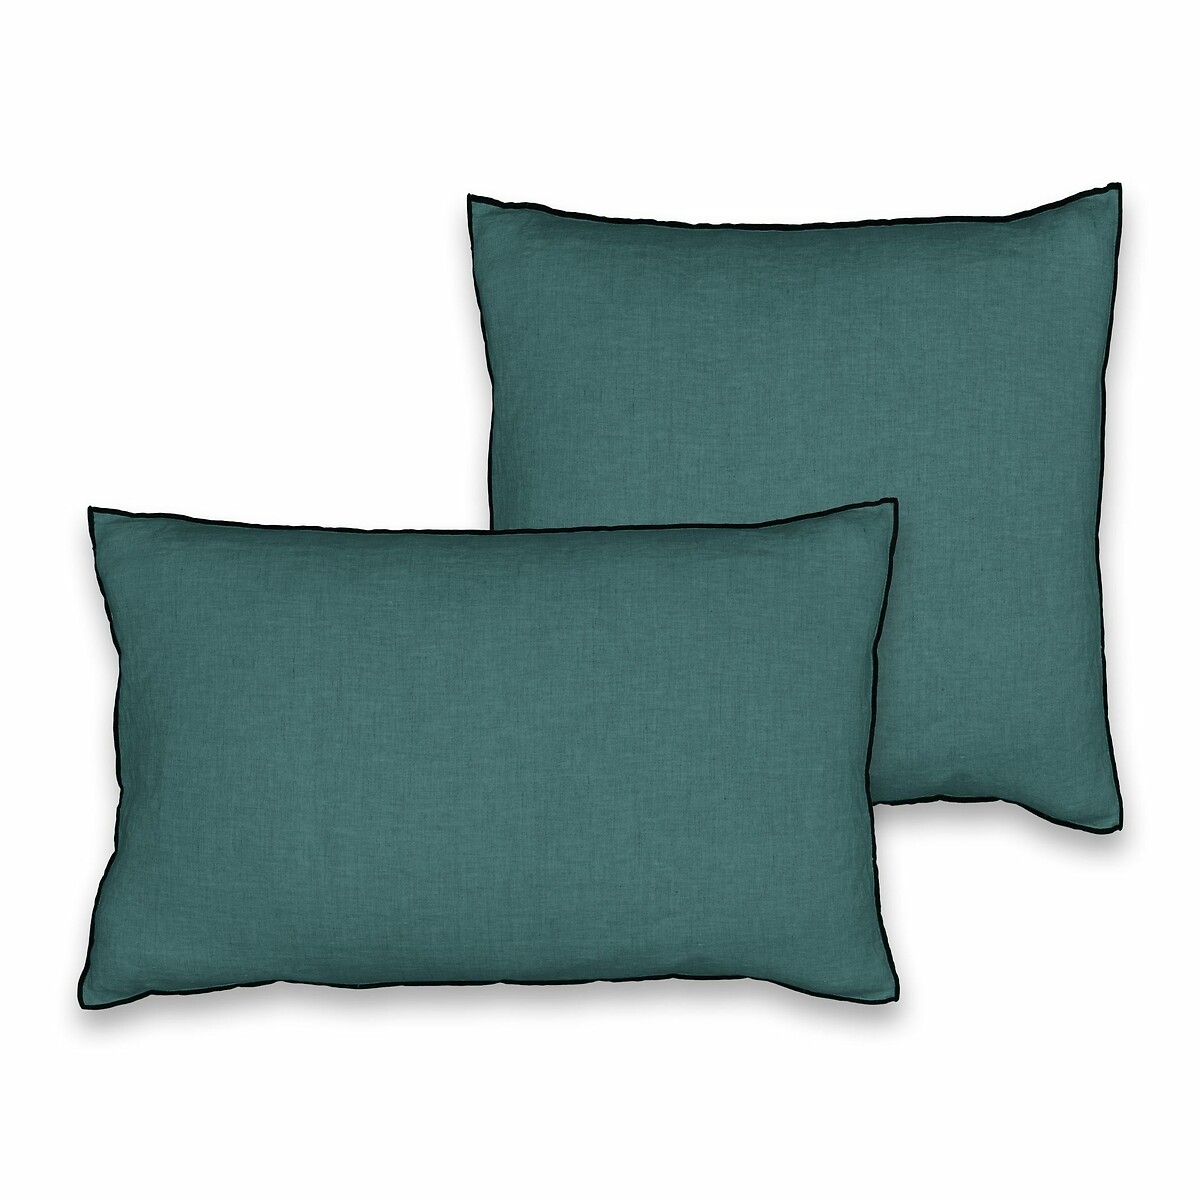 Чехол LaRedoute На подушку 100 стираный лен ELina 60 x 40 см зеленый, размер 60 x 40 см - фото 1